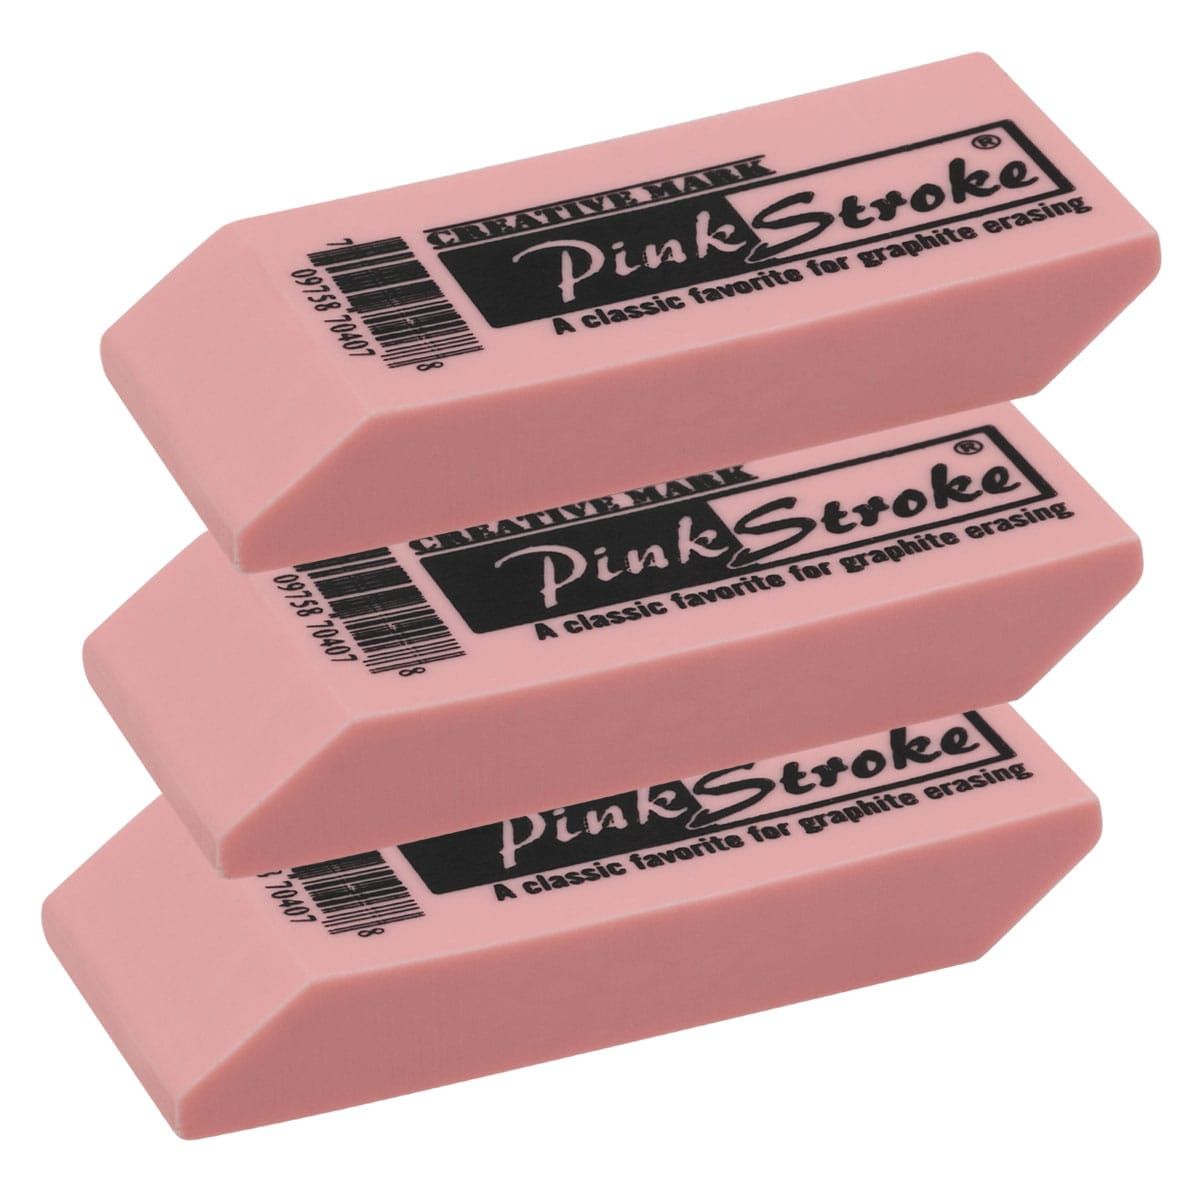 https://www.jerrysartarama.com/media/catalog/product/cache/ecb49a32eeb5603594b082bd5fe65733/c/r/creative-mark-pink-stroke-art-eraser-box-3.jpg